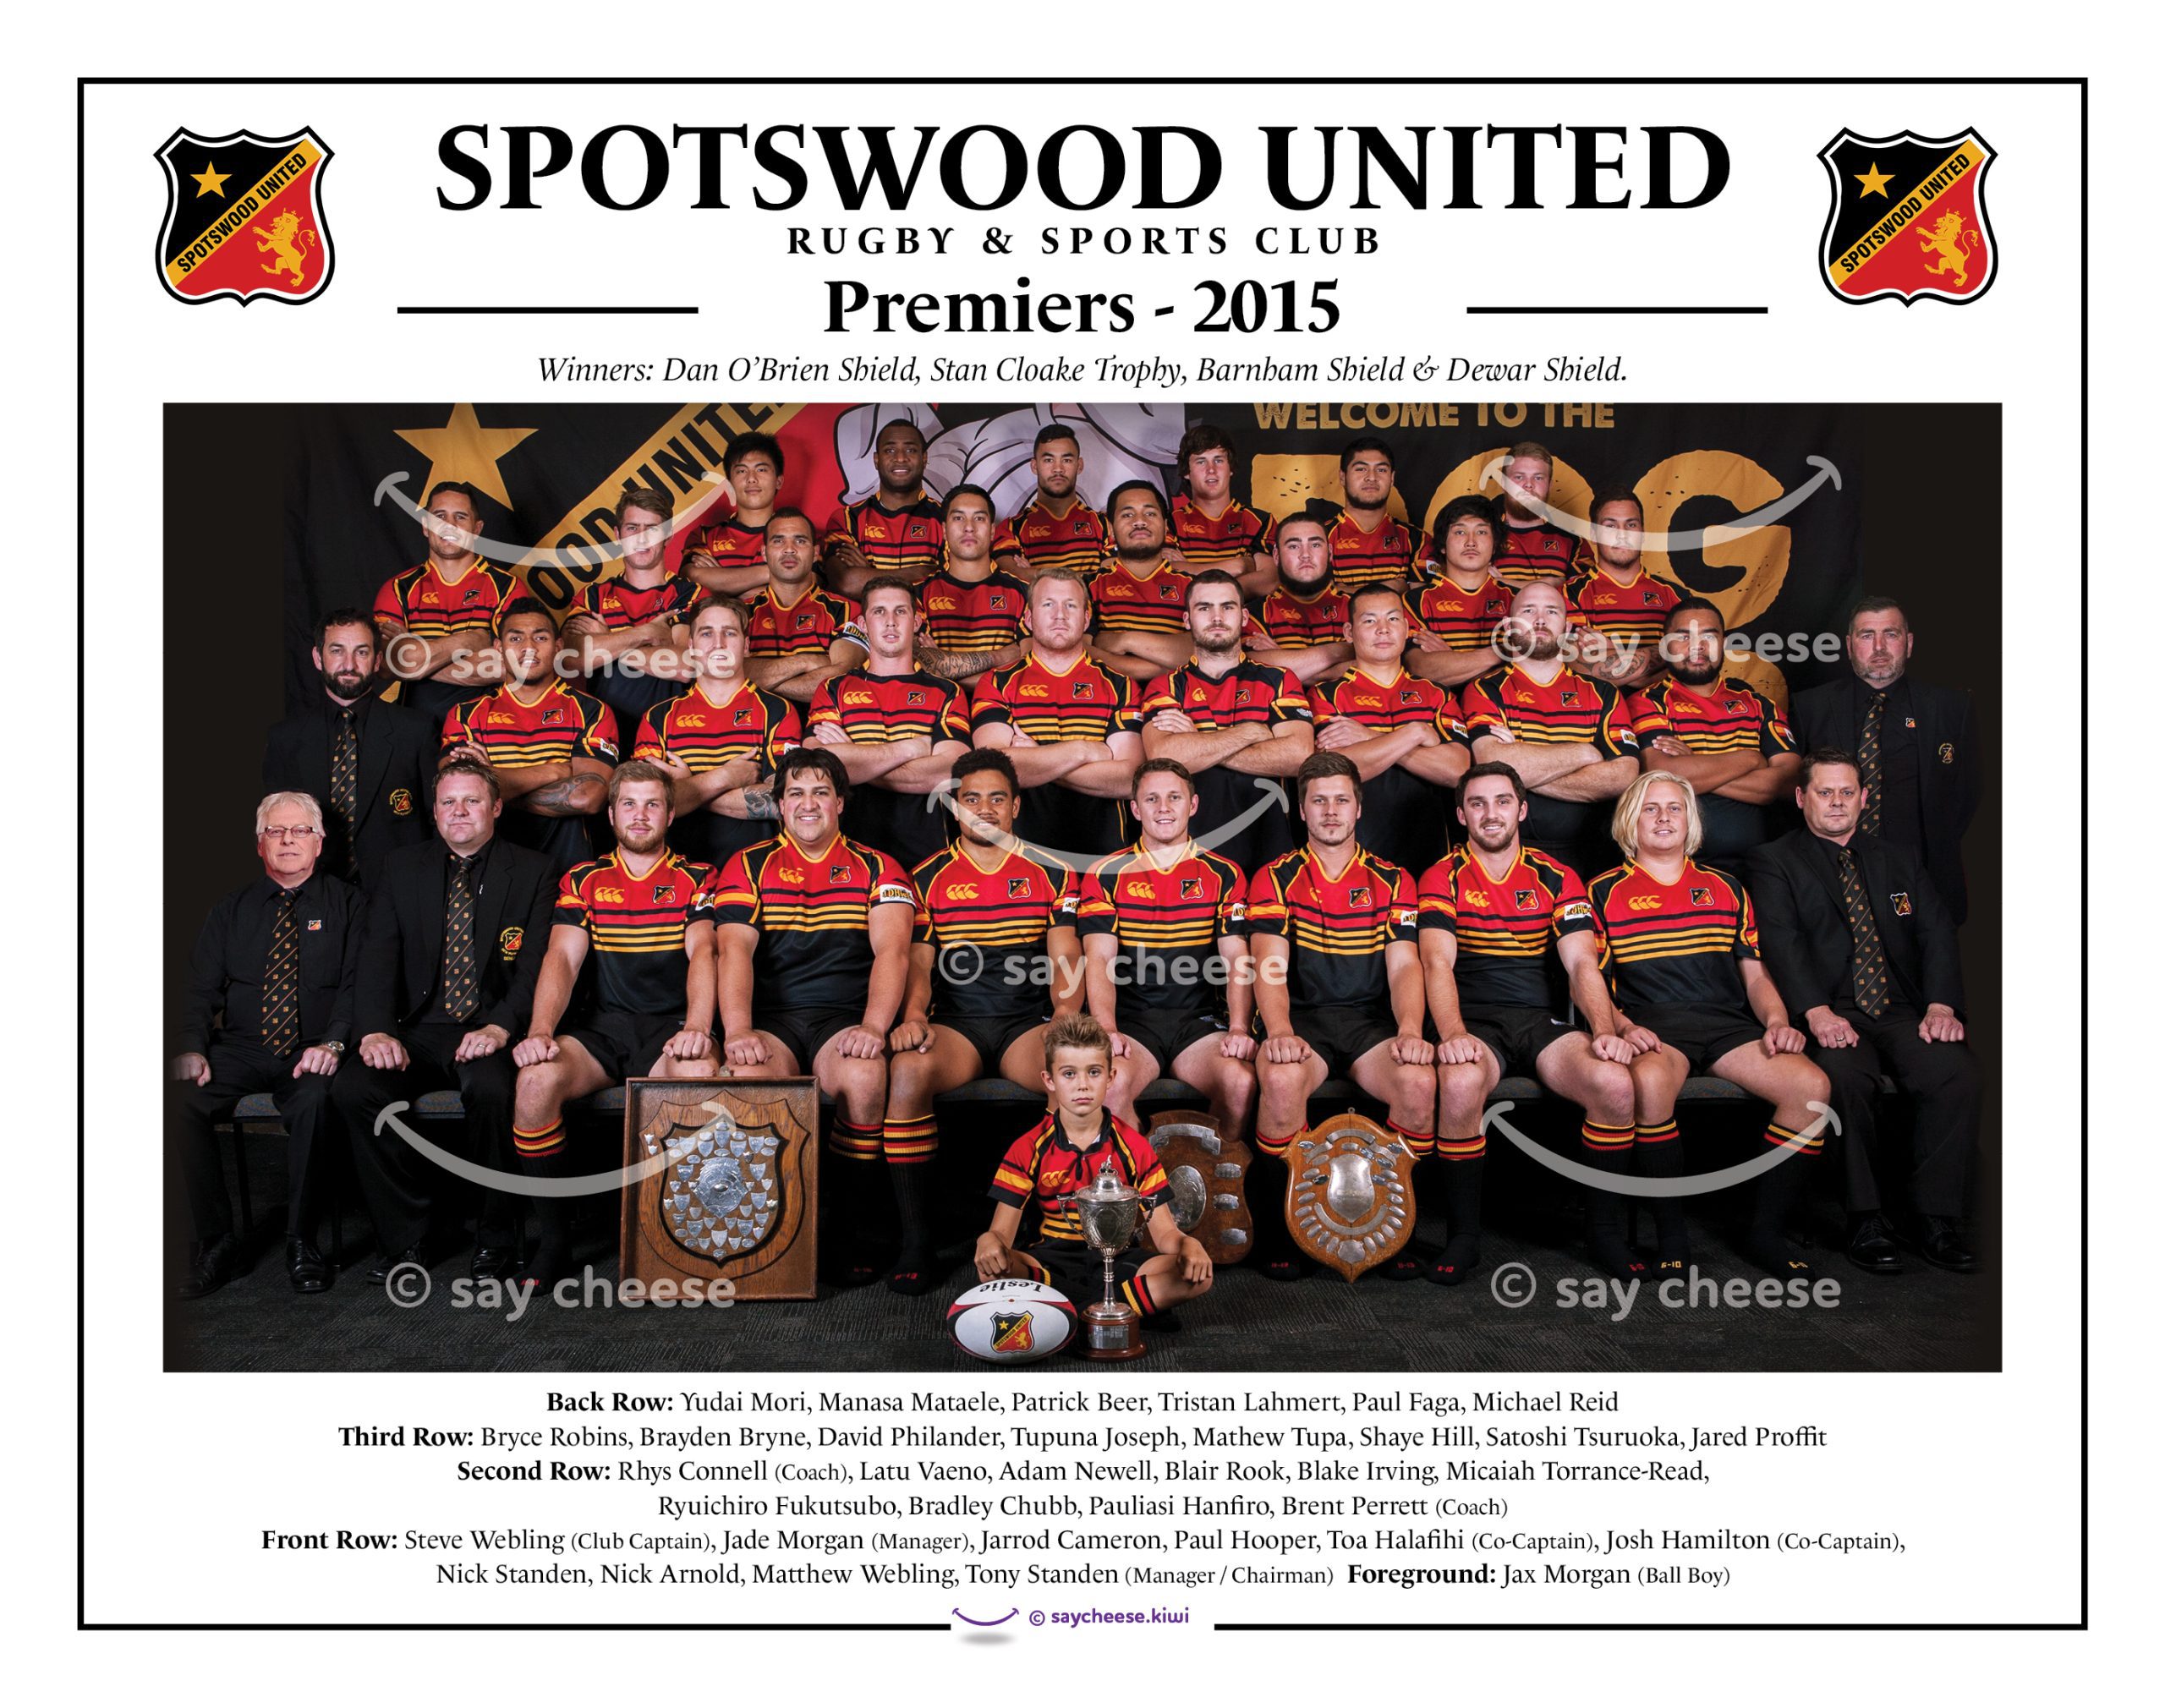 2015 Spotswood United Premiers [2015SPOTPREM]